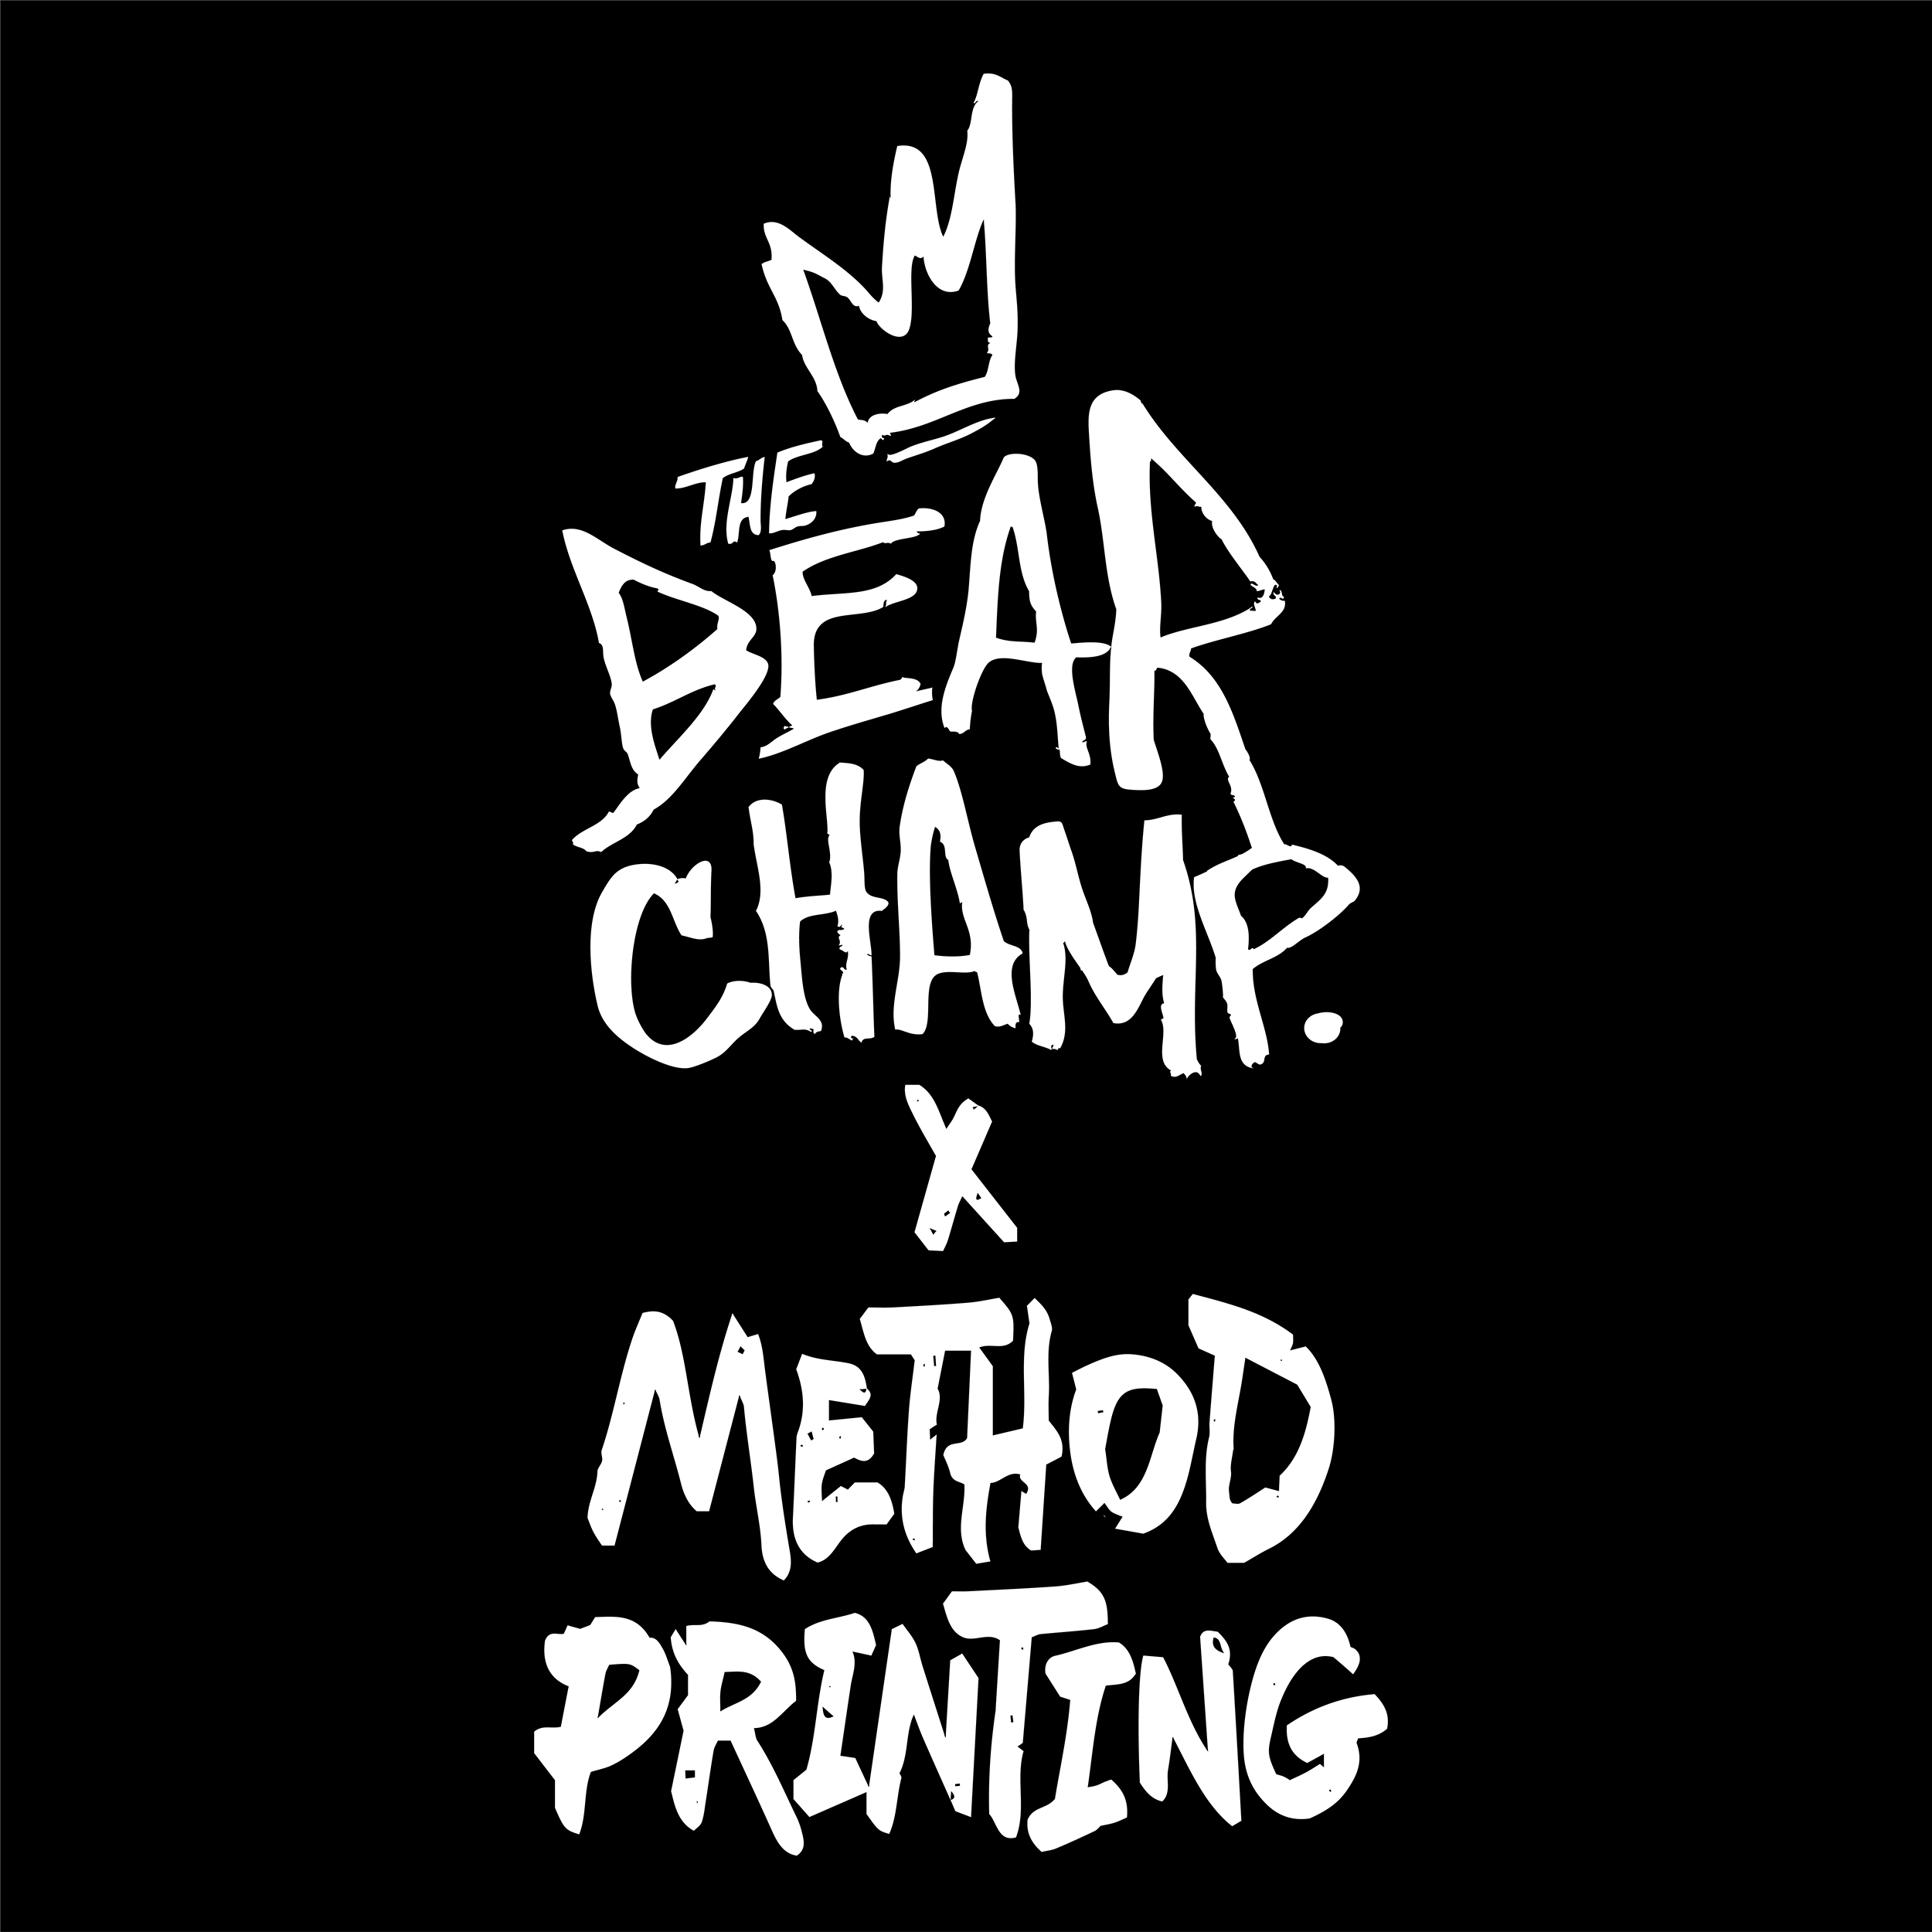 The-Bear-Champ-x-Method-Printing-Logo-Design